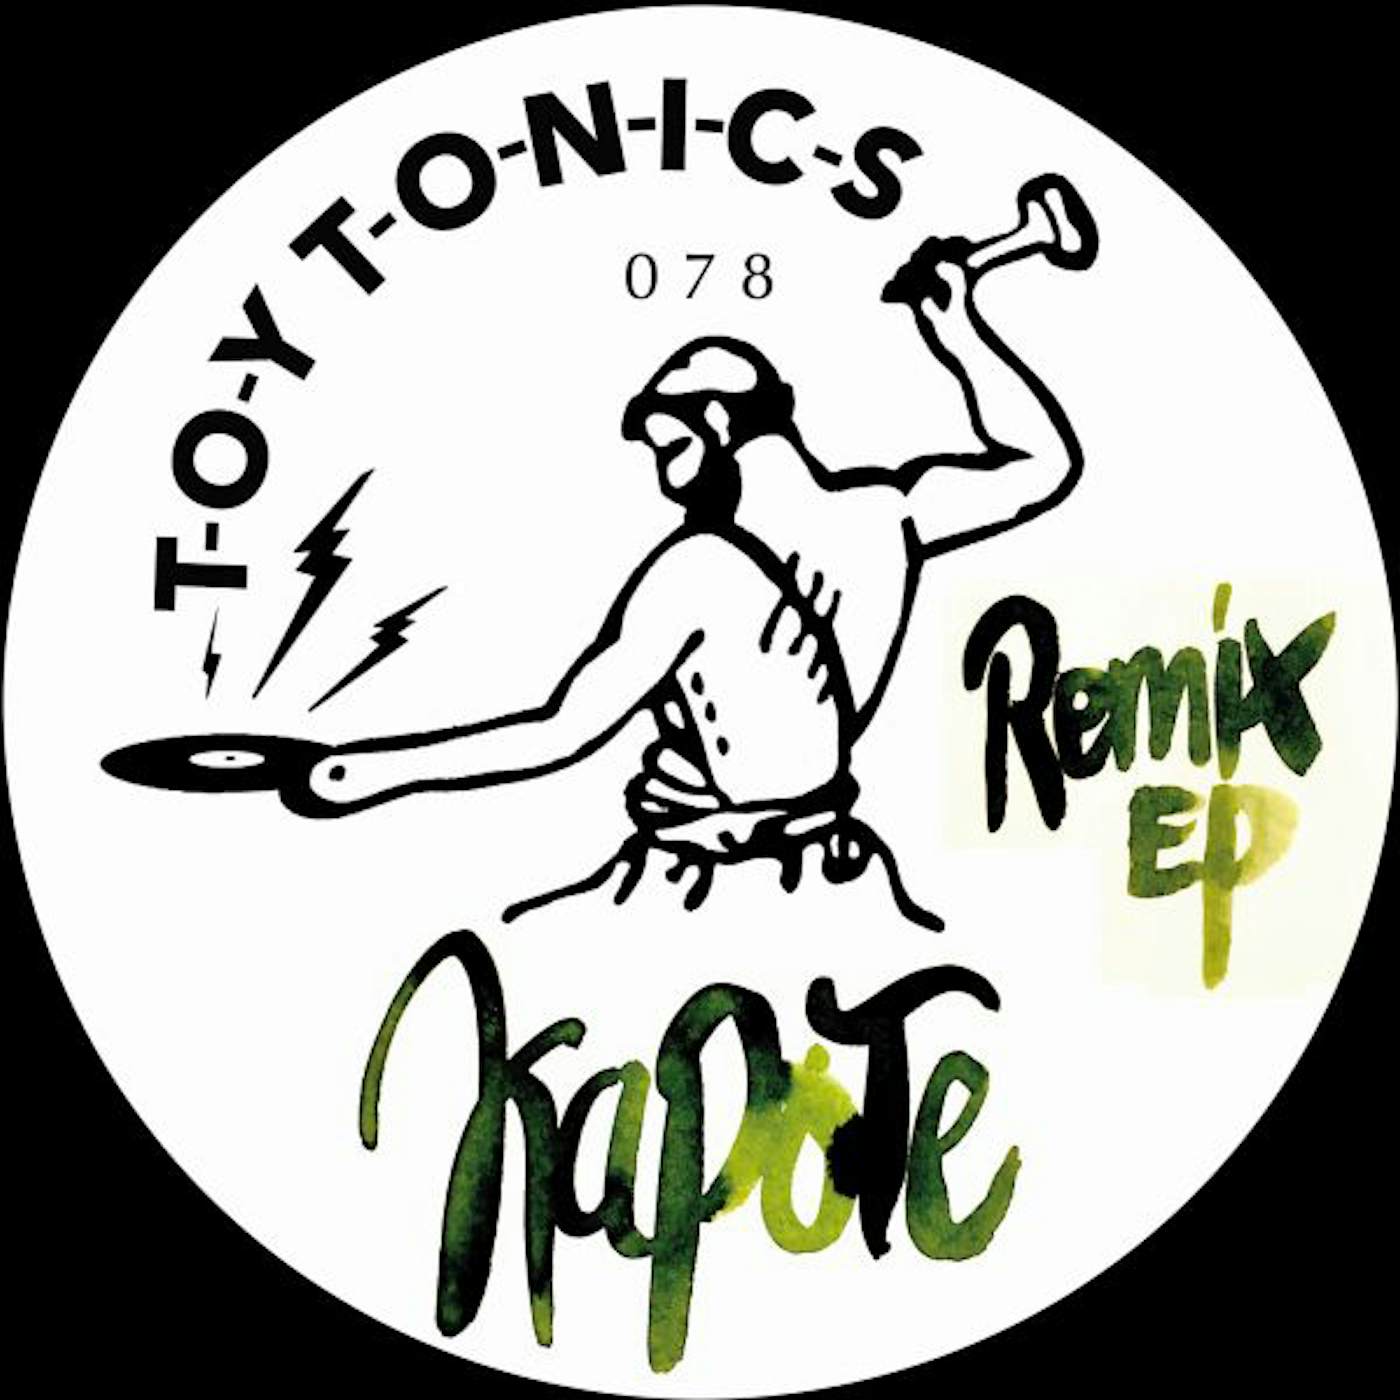 Kapote REMIX Vinyl Record